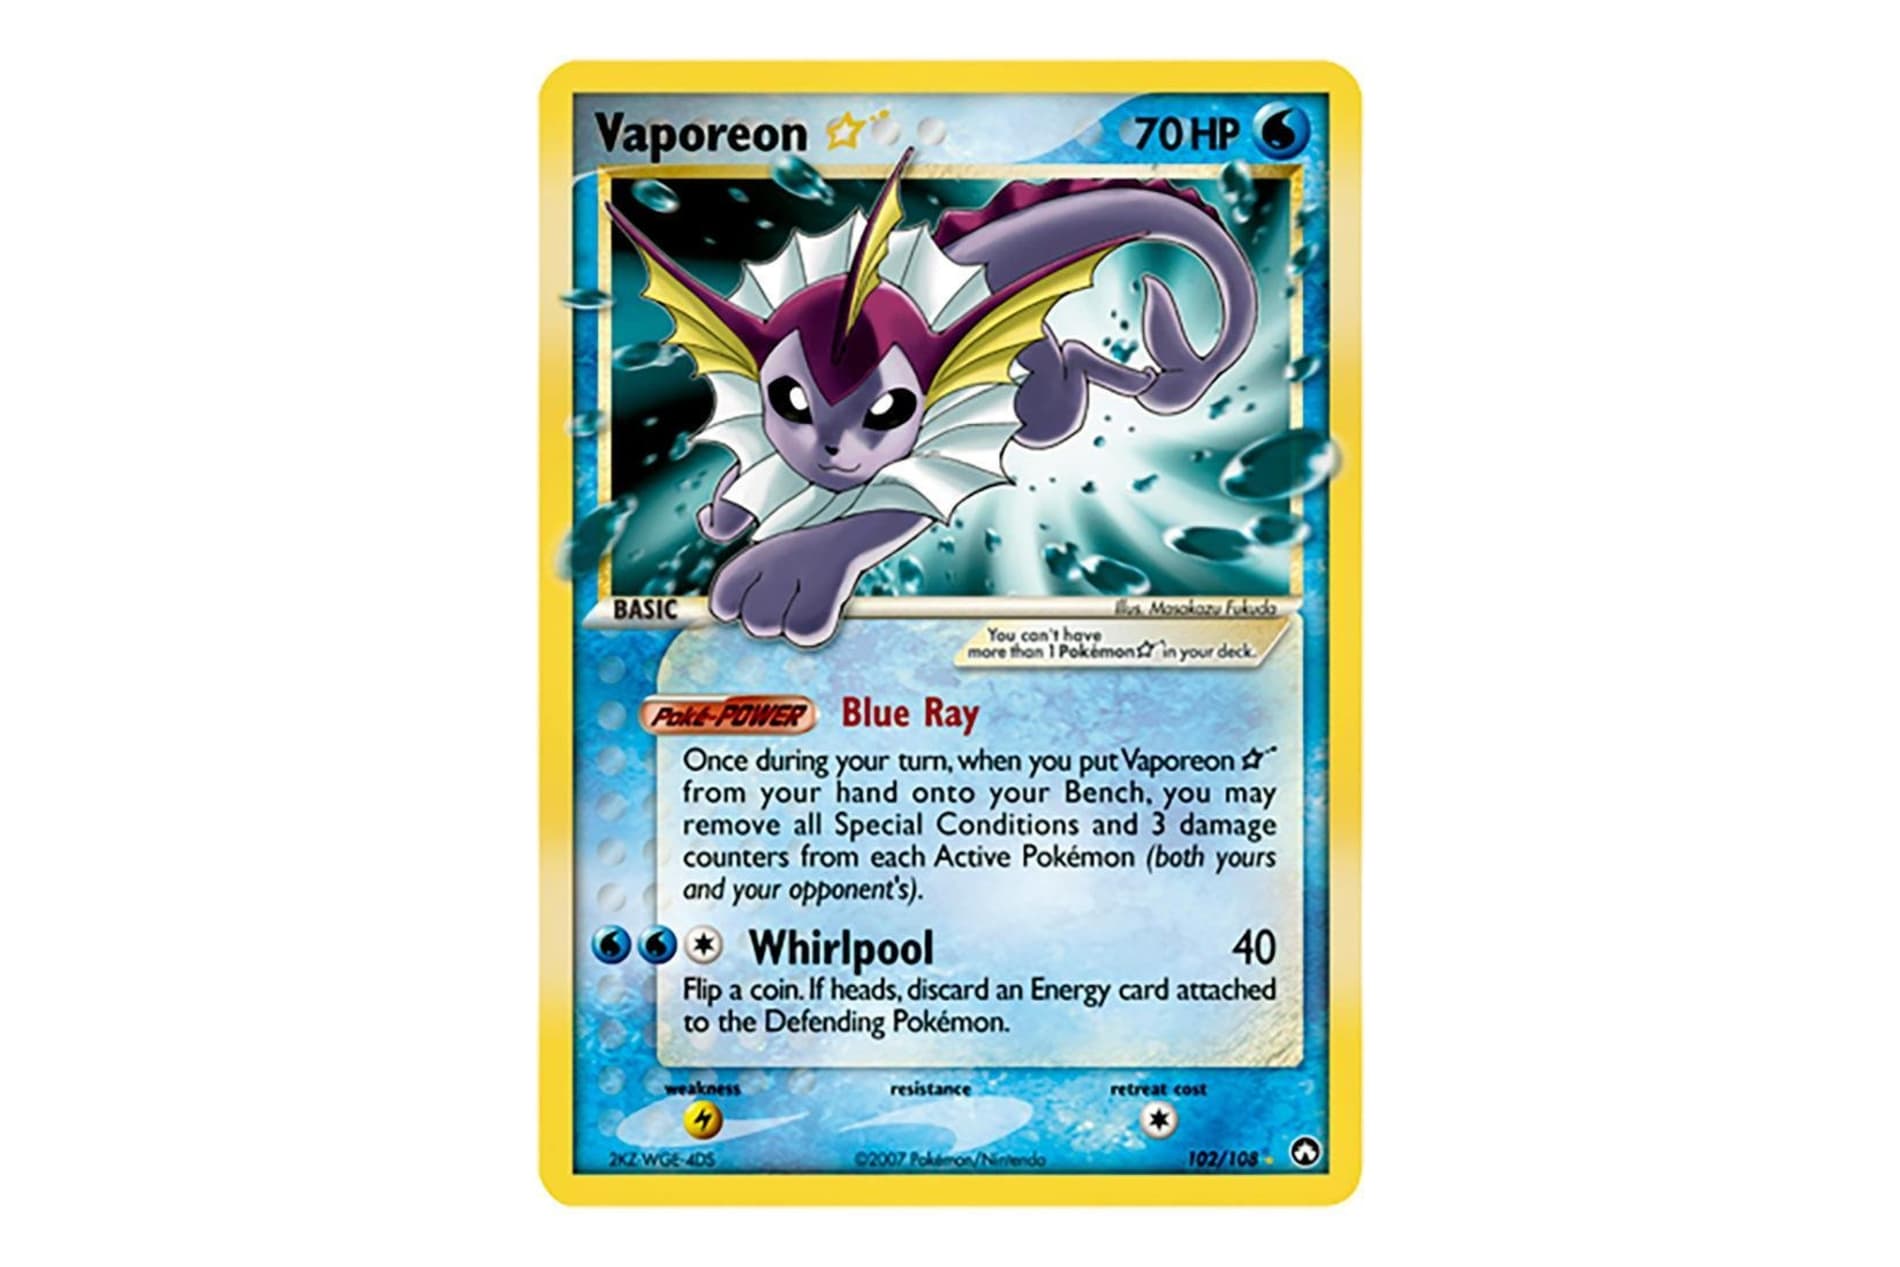 Vaporeon gold star Pokemon trading card